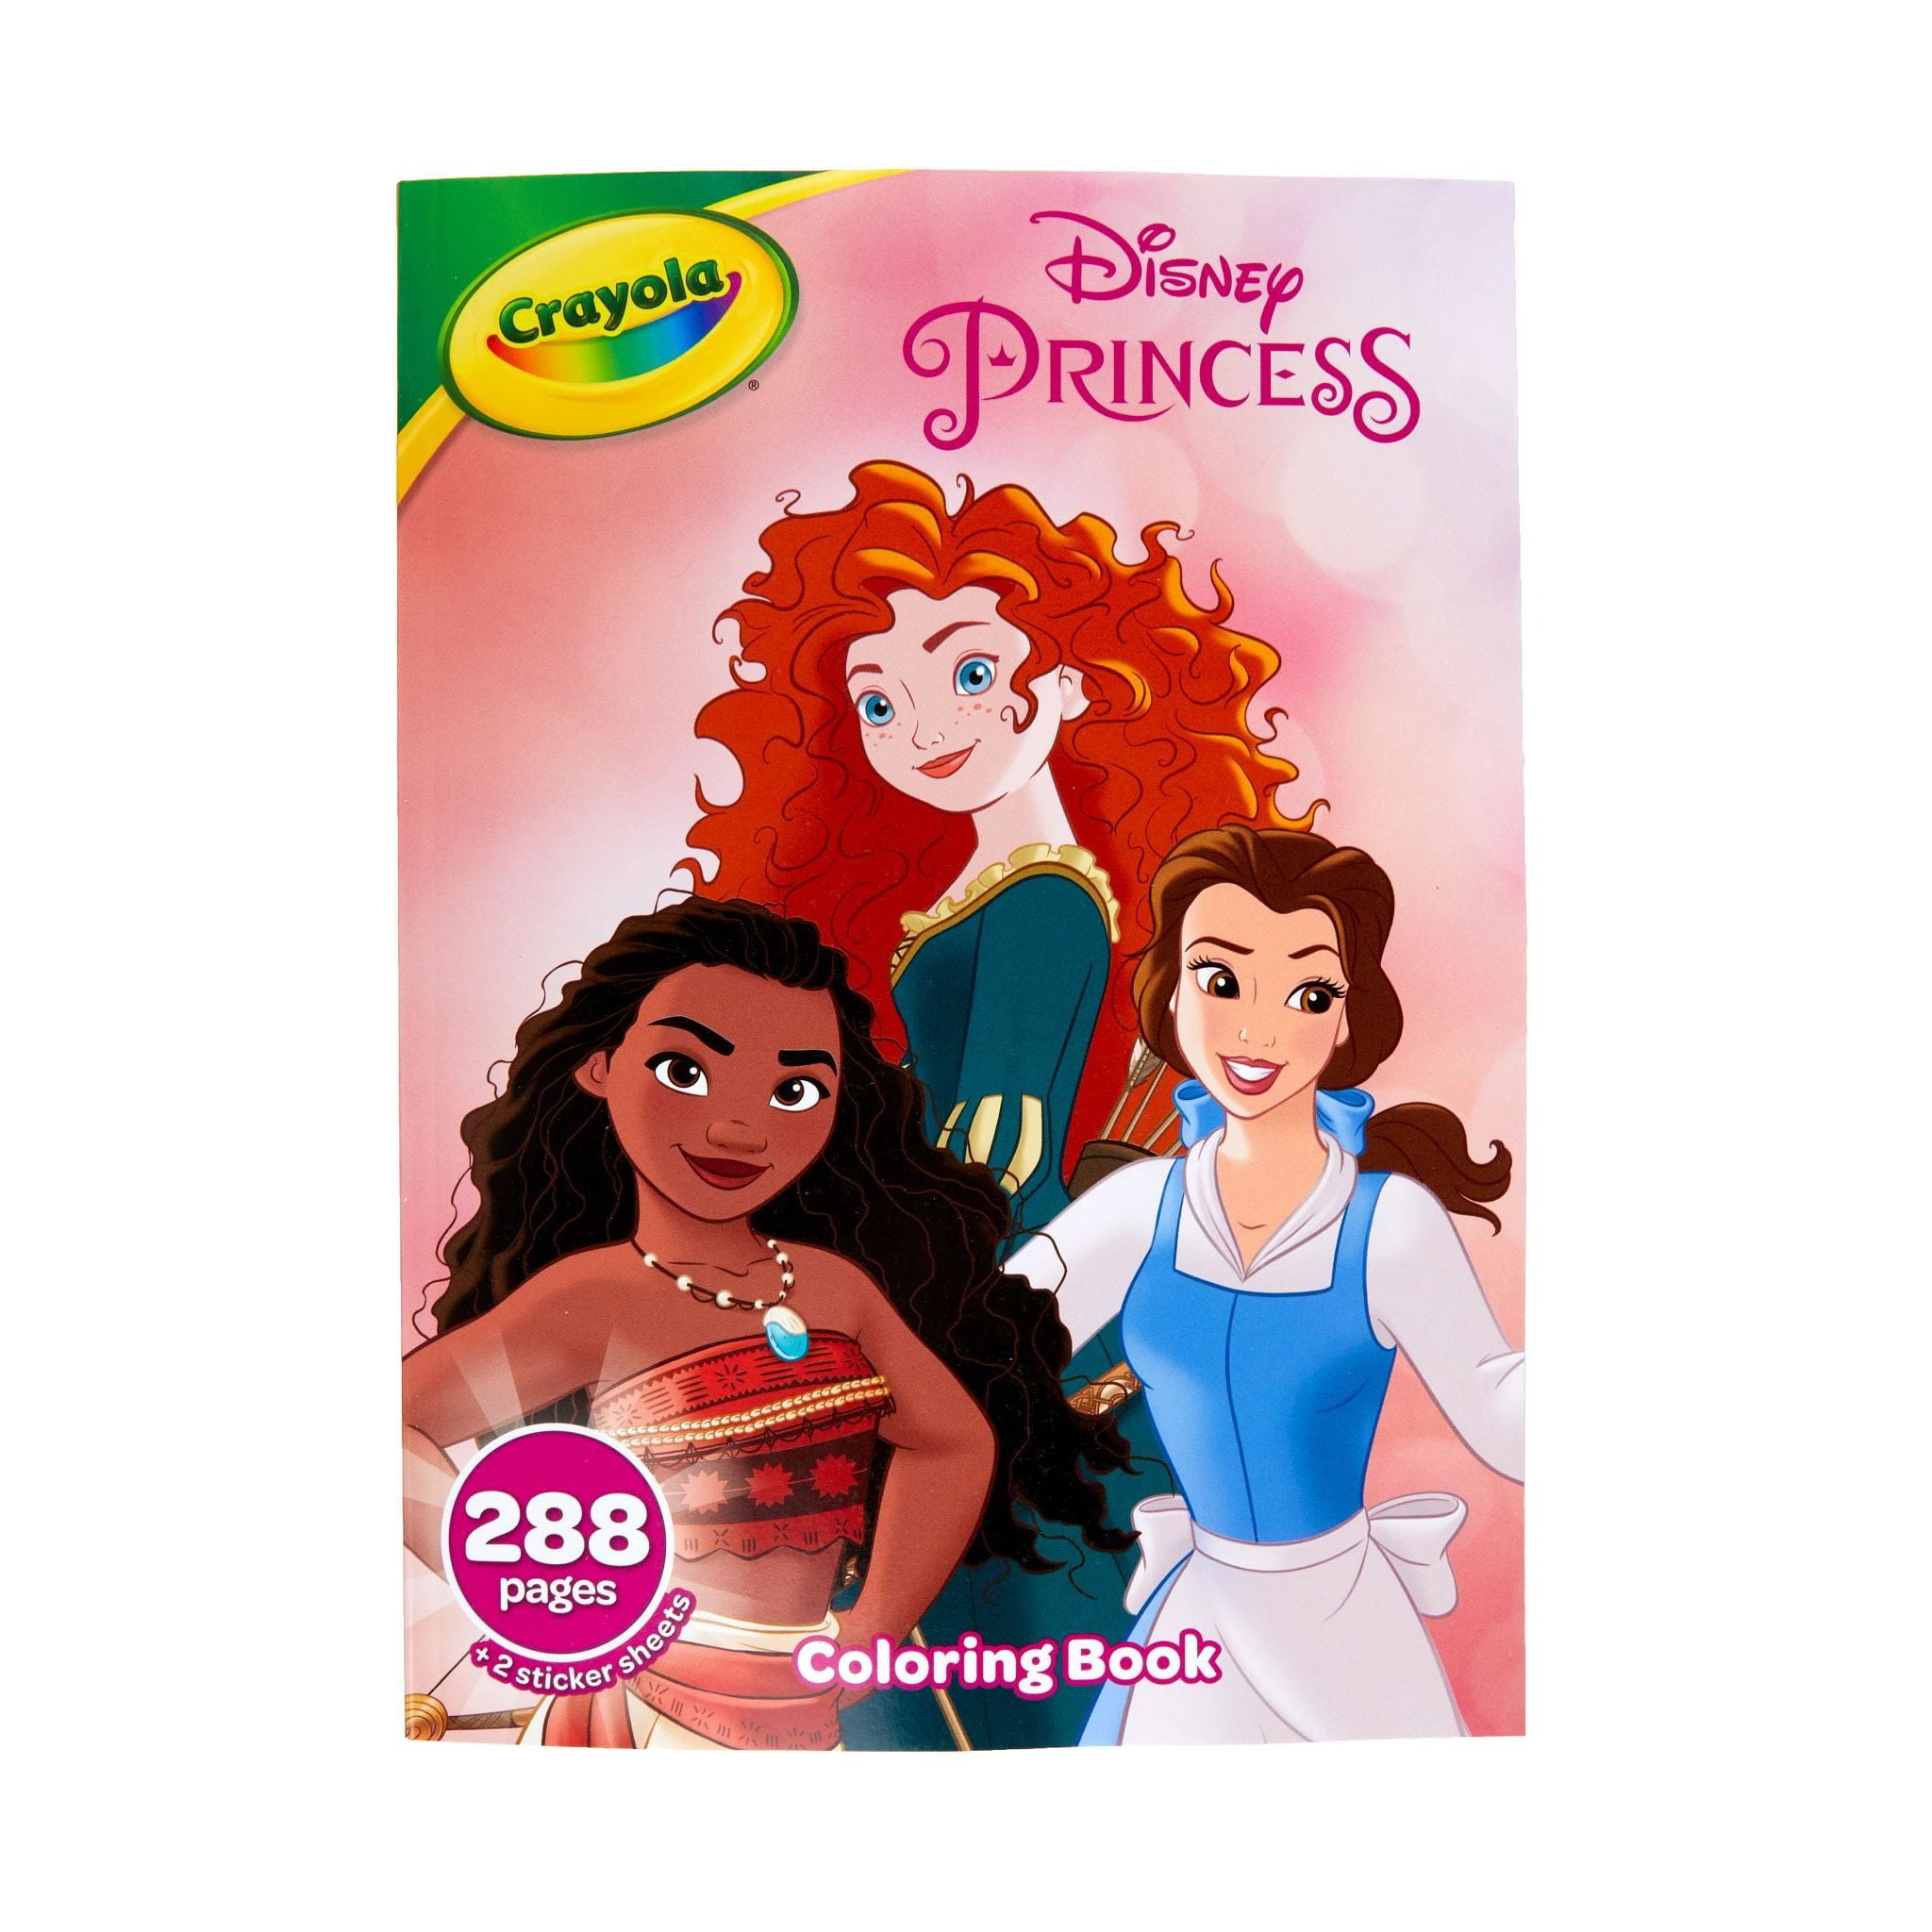 5pc Disney Princess Jumbo Coloring Activity Books Crayons & Sticker Story  Belle